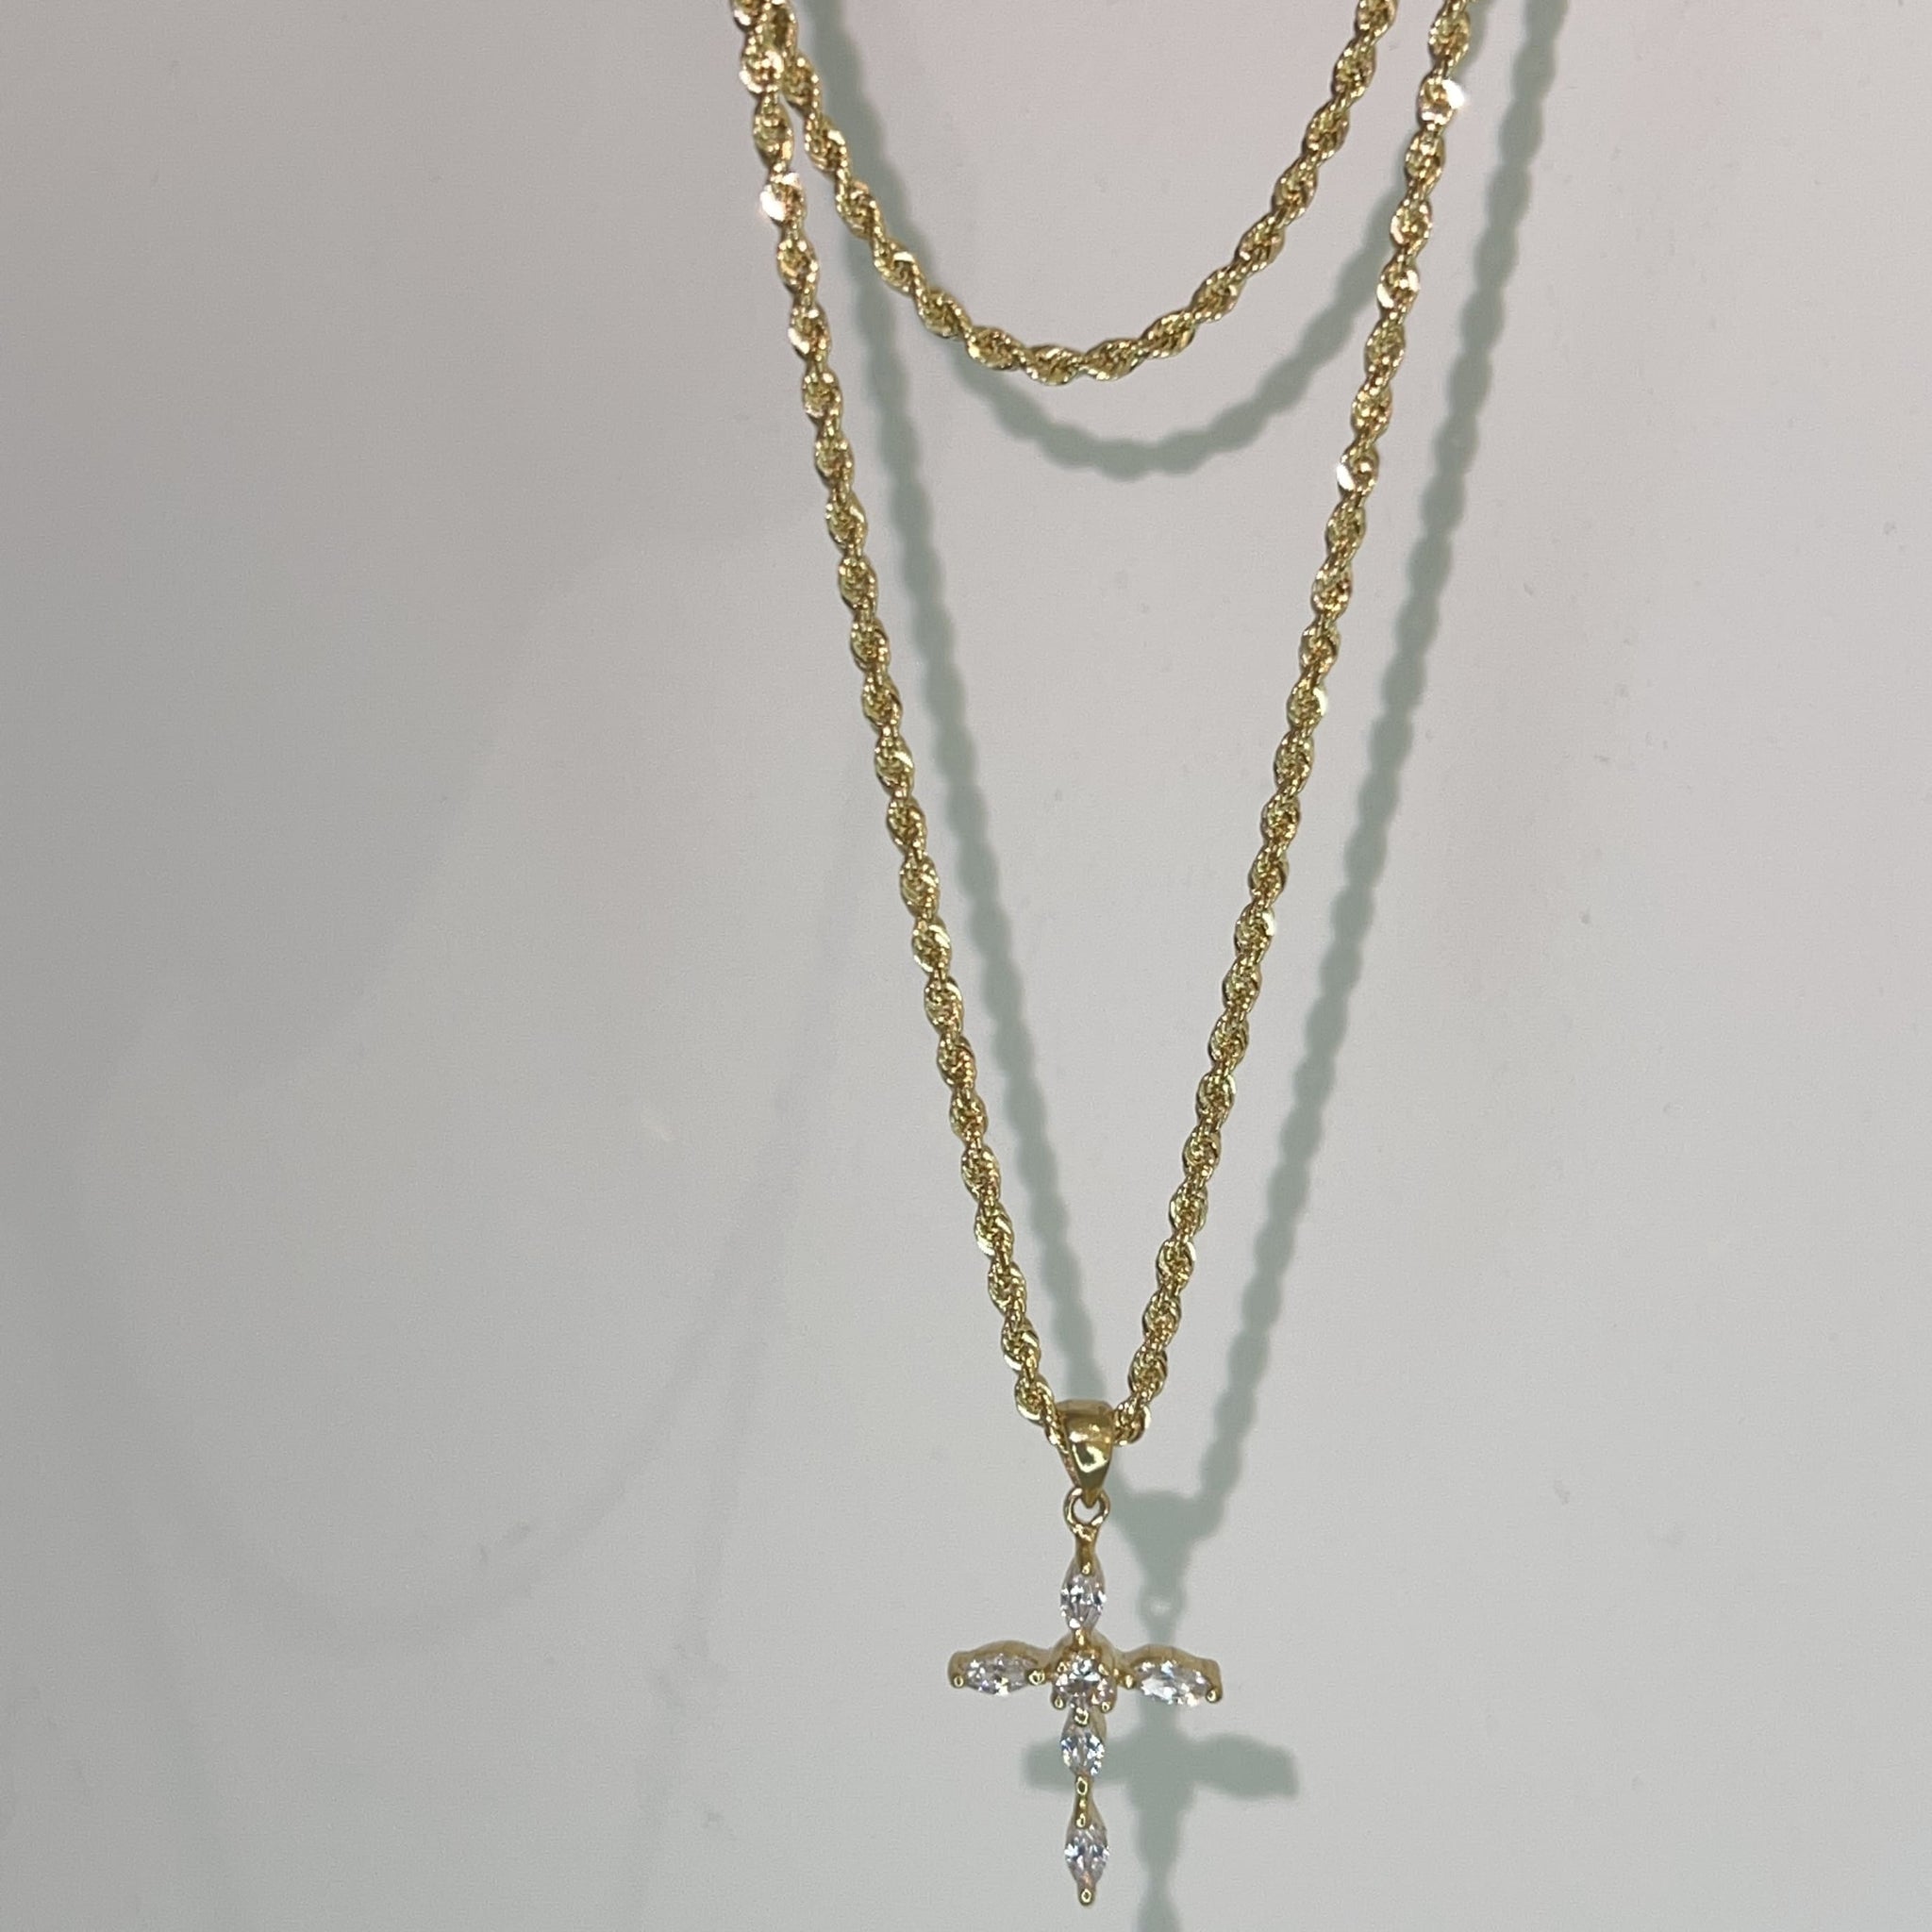 Rope chain + Cross pendant - 14 carat gold - 2.2mm / 60cm